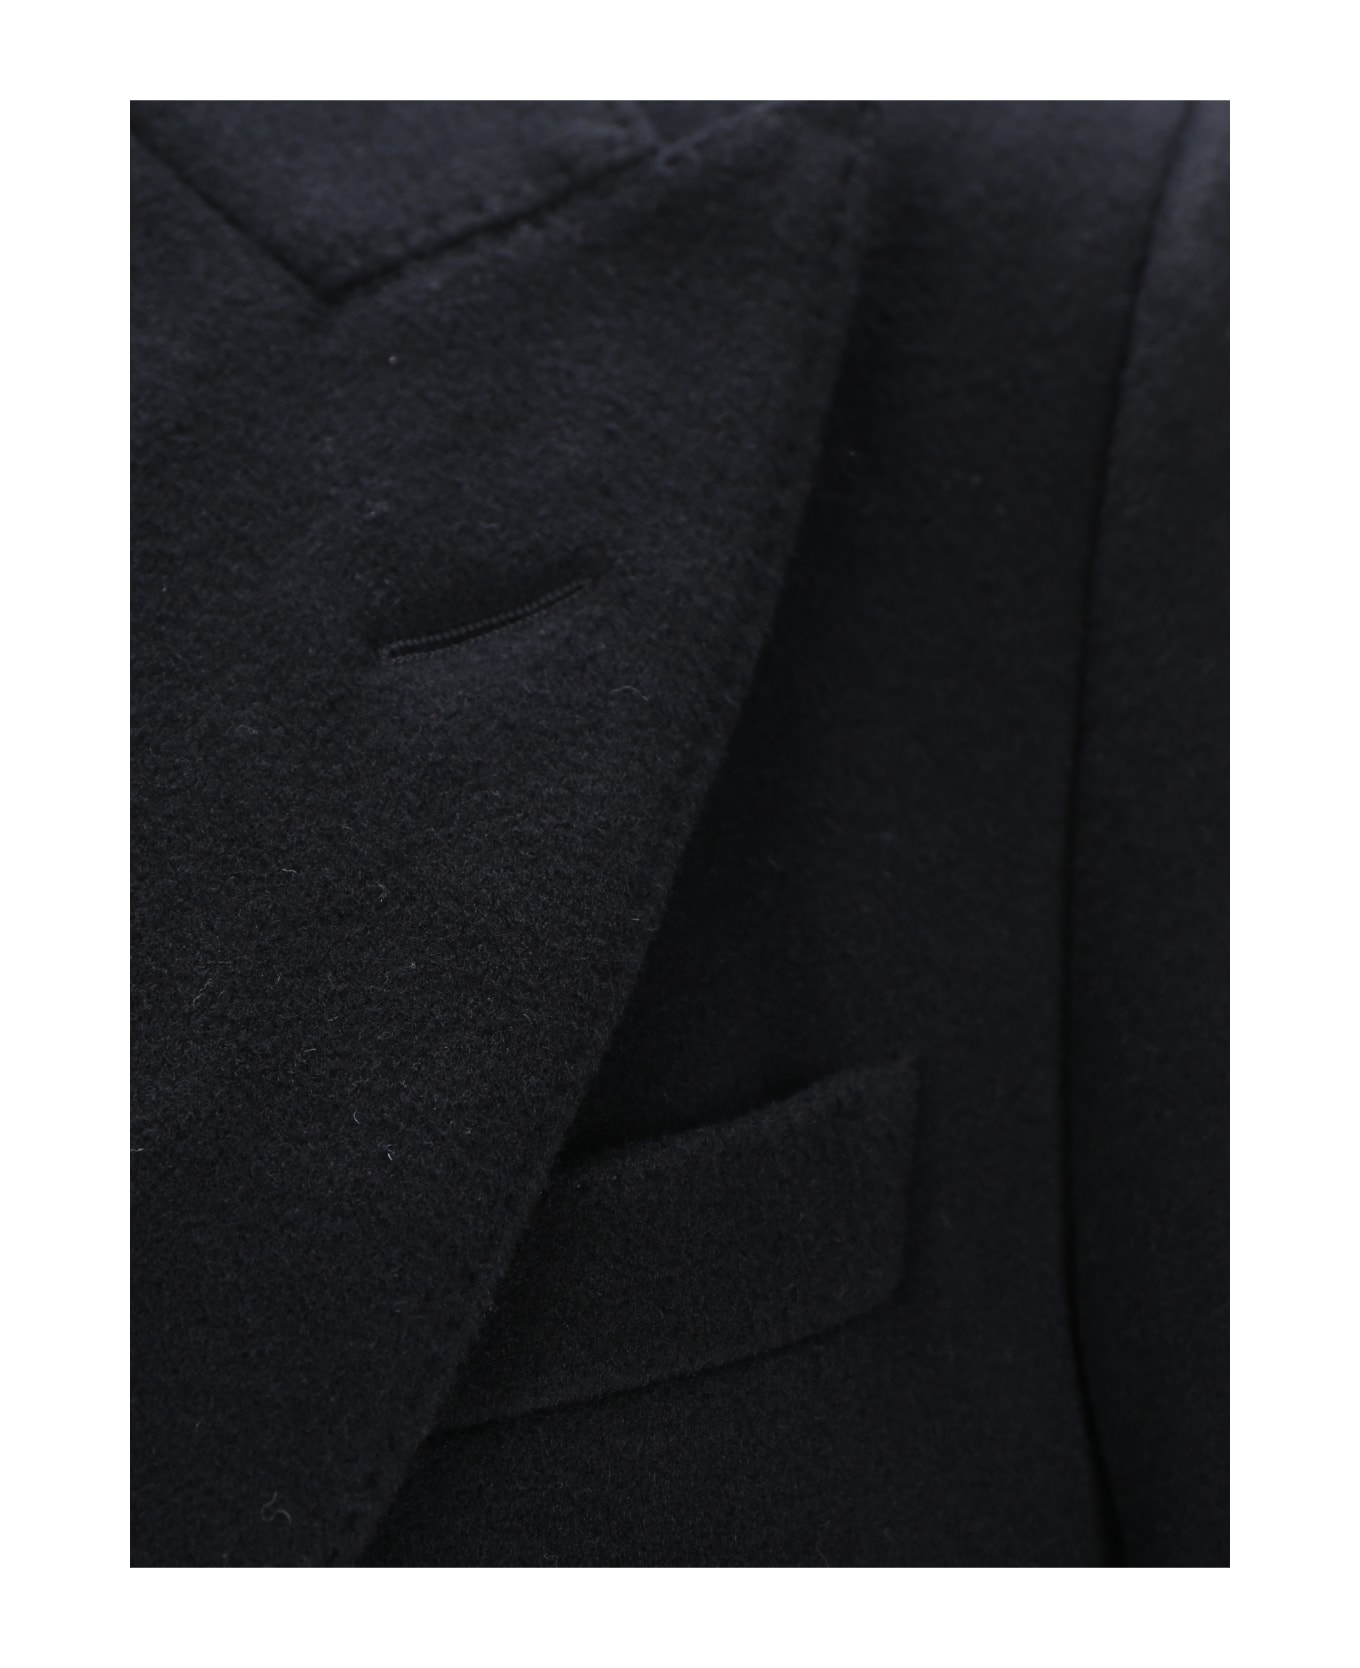 Dolce & Gabbana Re-edition Wool Blend Coat - Black